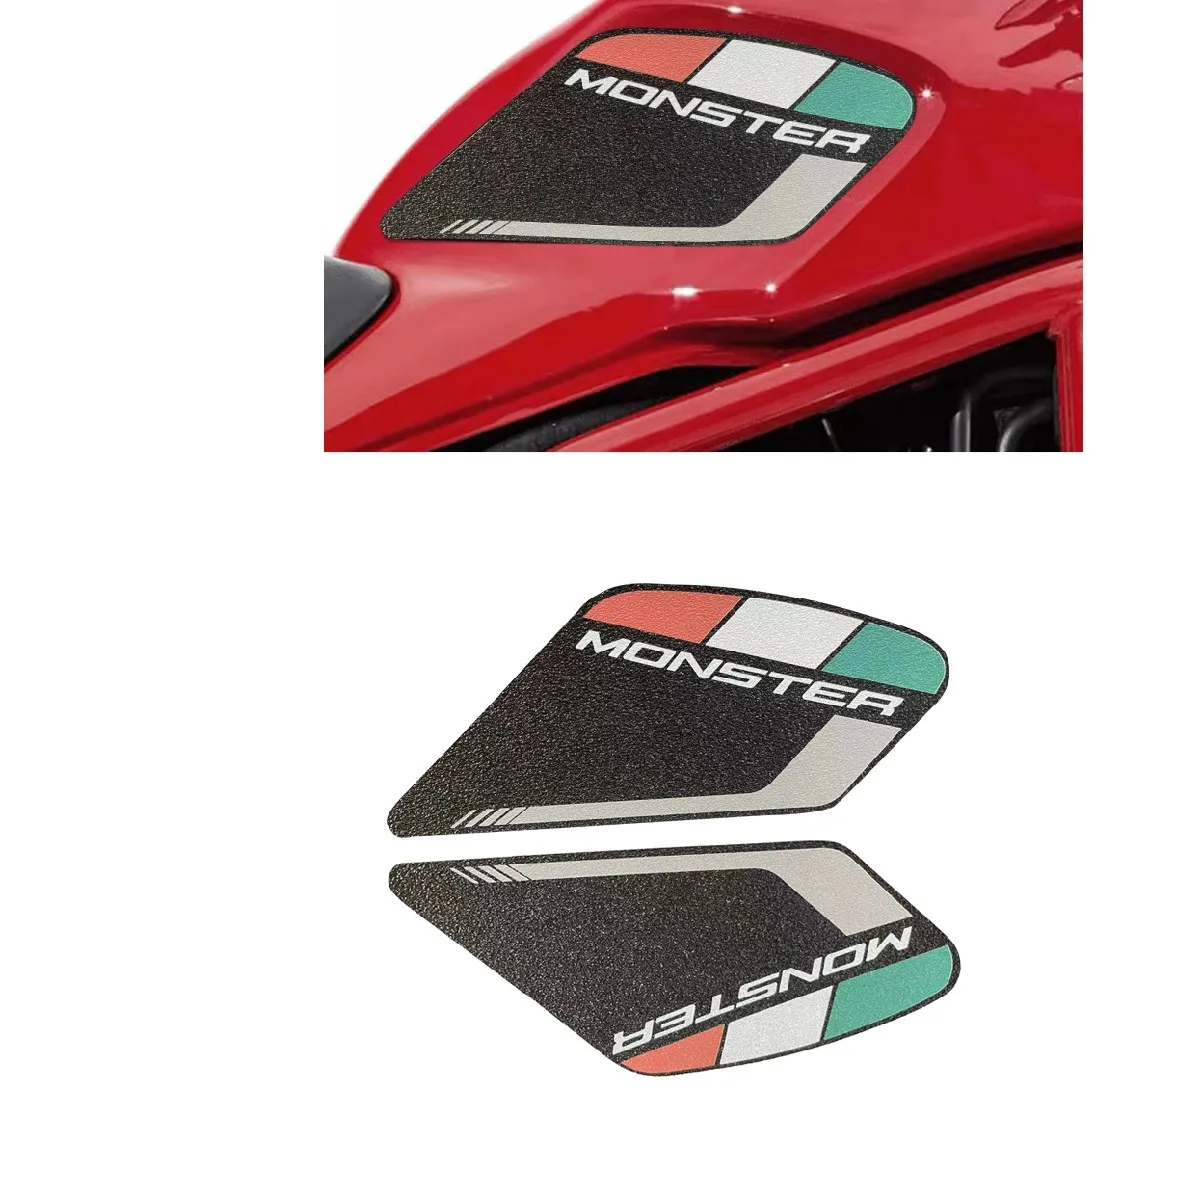 For Ducati Monster 797 821 1200 2017-2019 18 Sticker Motorcycle Anti-slip Side Tank Pad Protection Knee Grip Mat отвертка ph1 80 мм jonnesway anti slip grip крестовая d71p180